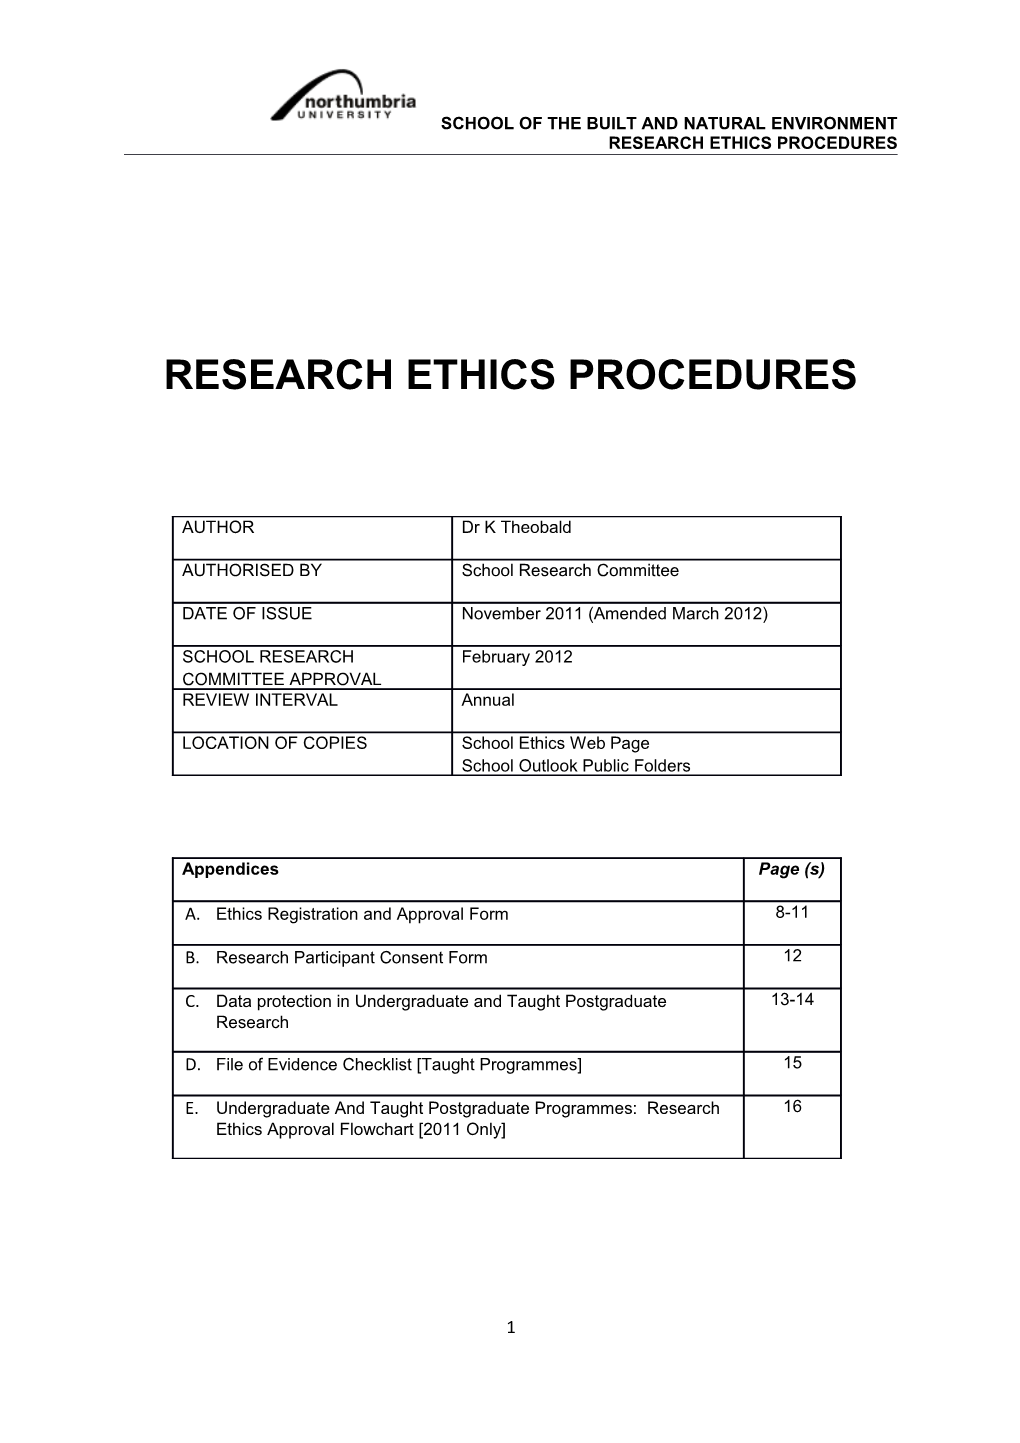 Research Ethics Procedures